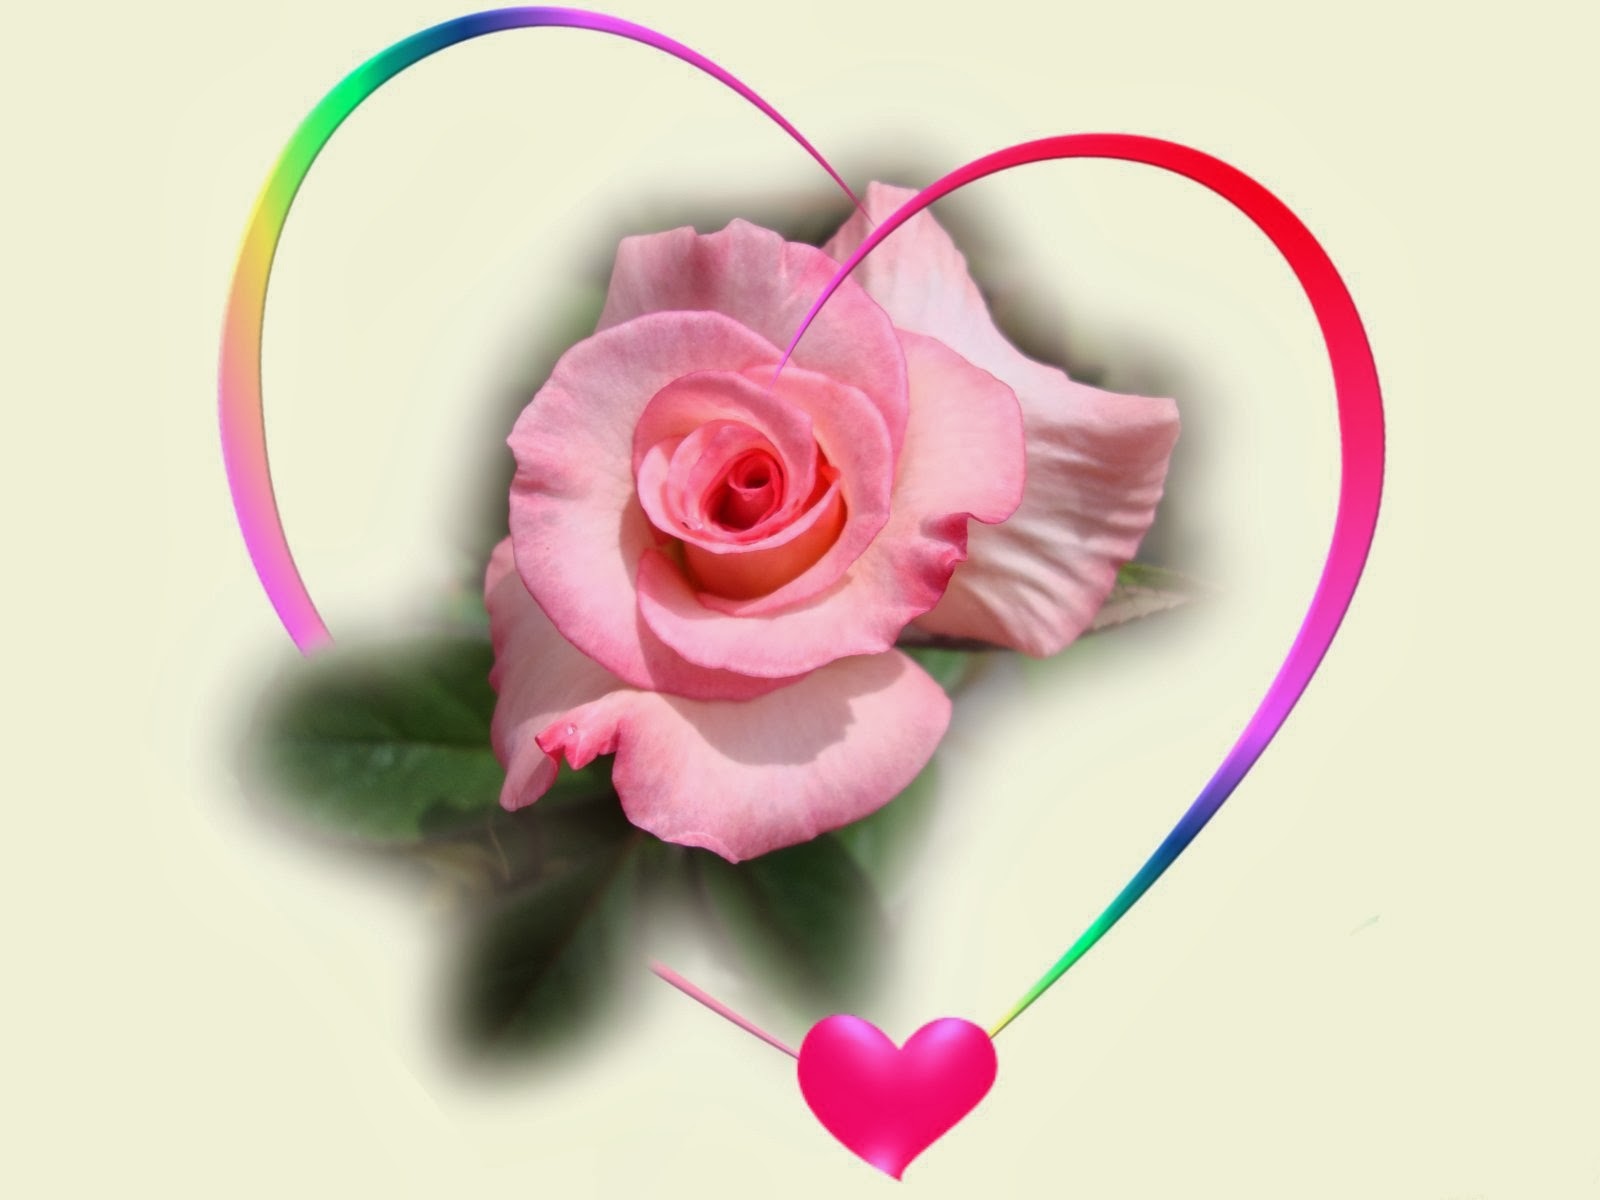 rose with heart wallpaper,pink,heart,garden roses,rose,petal